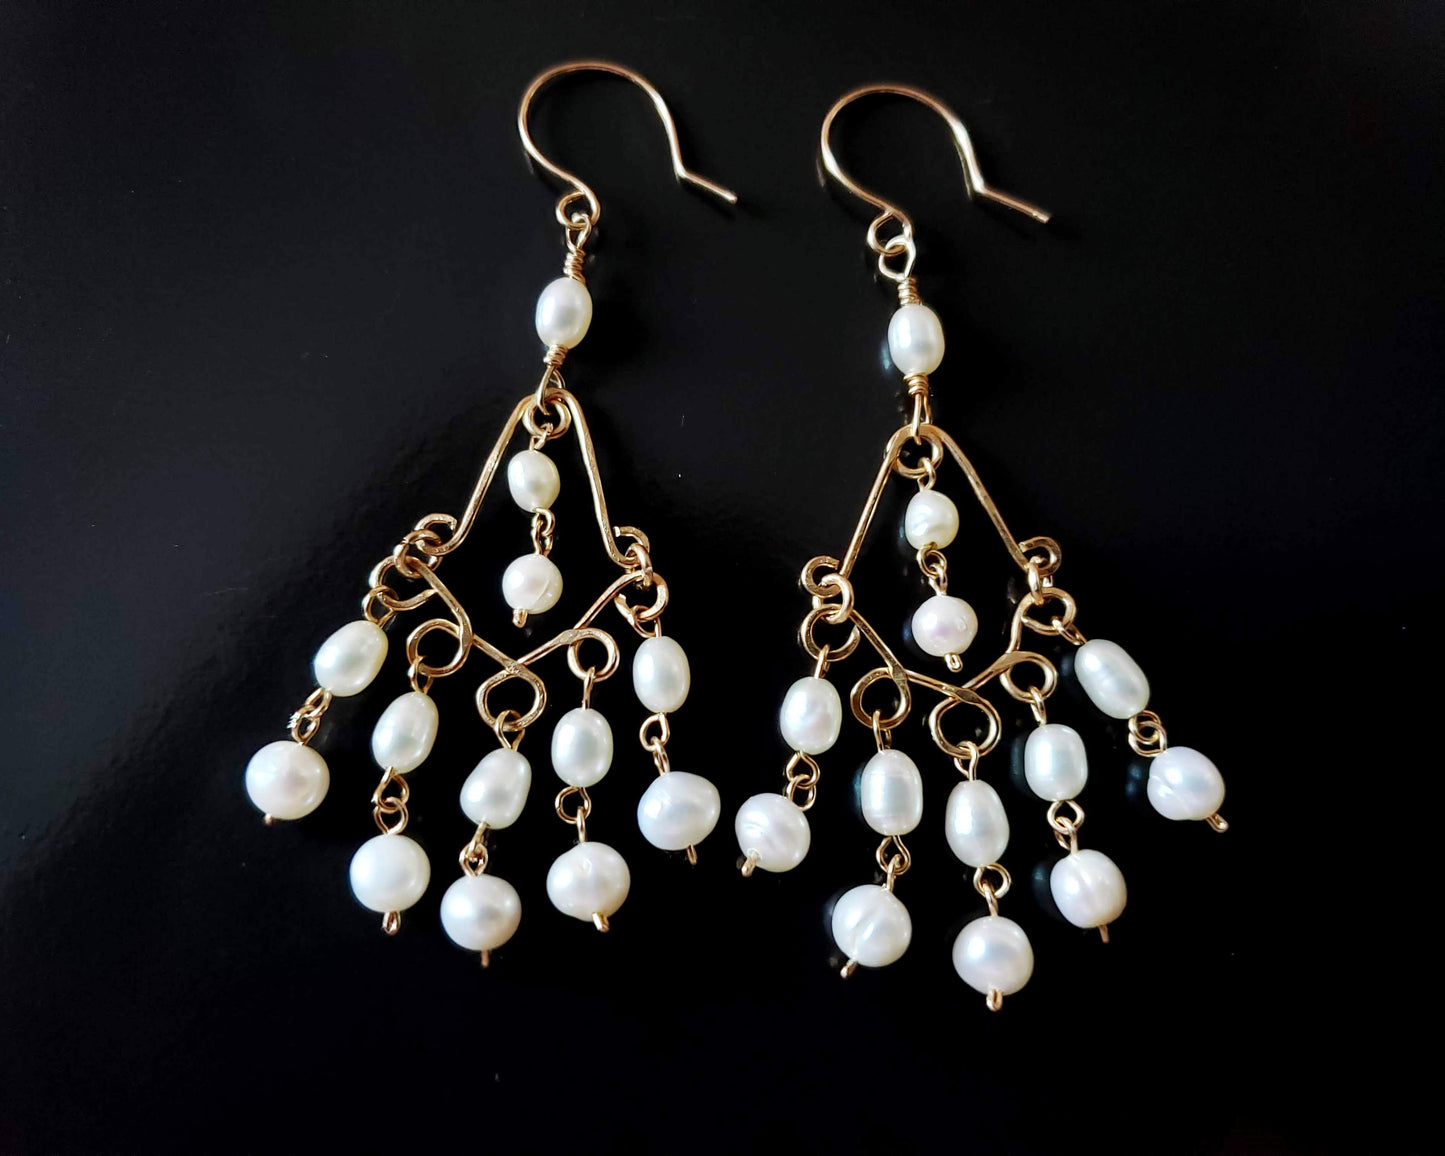 Bohemian Treasure Pearl Chandelier Earrings, Long White Pearl Earrings, 14k Gold Filled and Freshwater Cultured Pearls